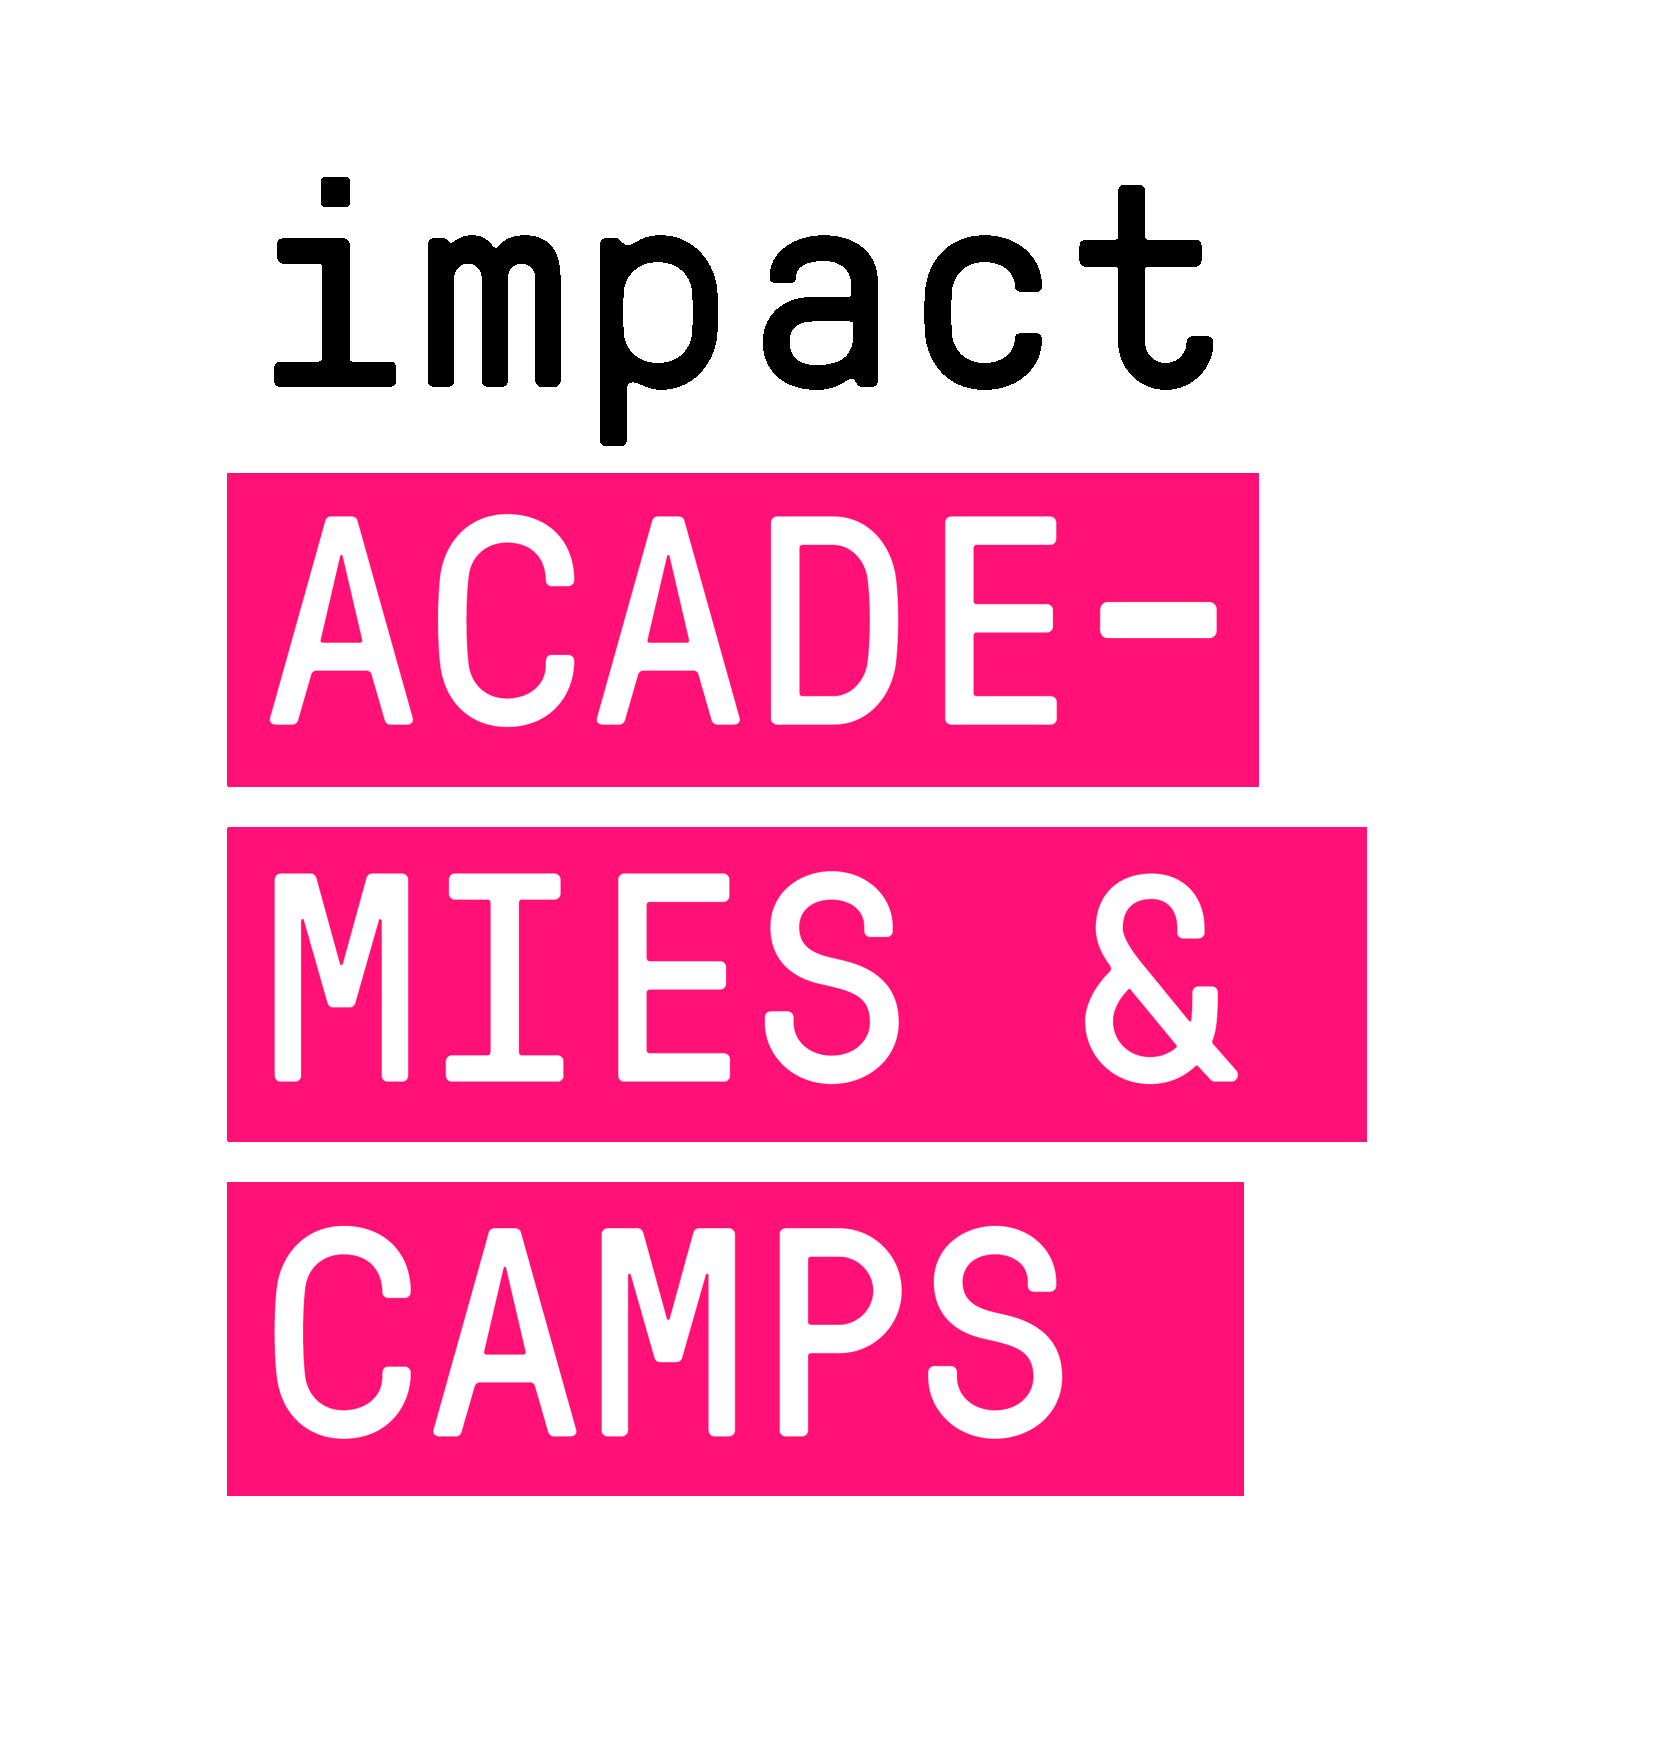 Impact Academy. Impact Academies Тирасполь. Impact Academia. Impact logo. Импакт академия